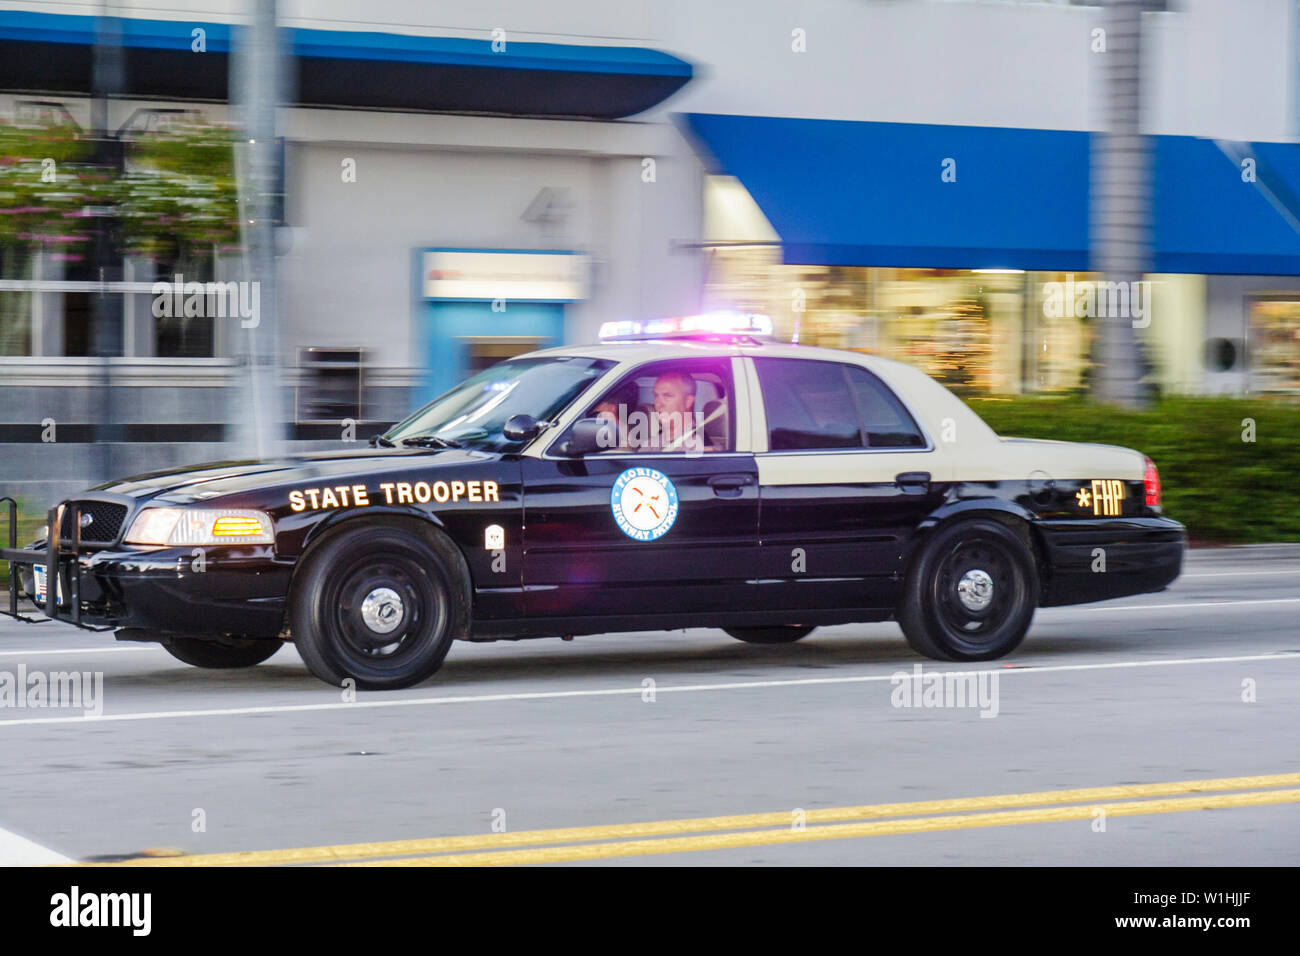 Miami Beach Florida,41st Street,Arthur Godfrey Road,State Trooper,FHP,Florida Highway Patrol,car,vehicle,emergency lights,police,officer,public safety Stock Photo